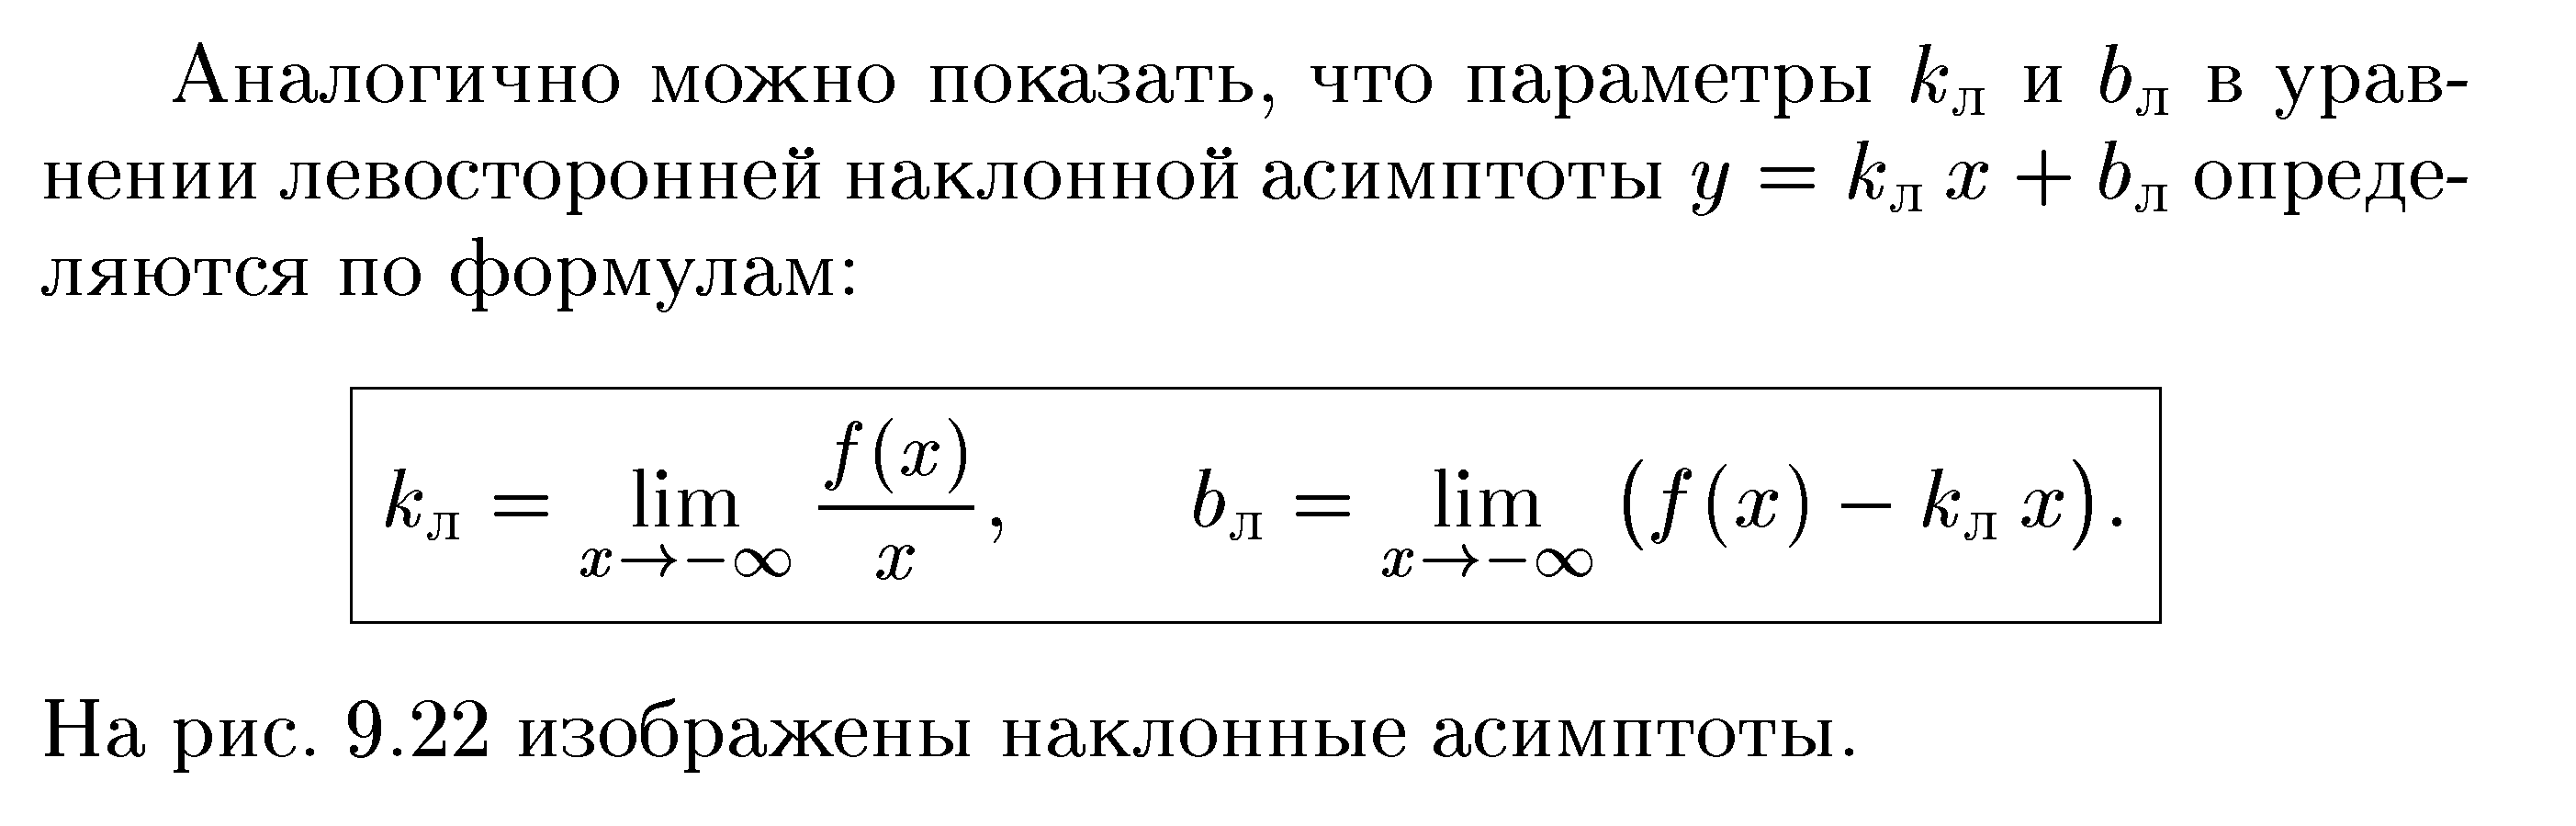 п. 4.5. асимптоты графика функции - student2.ru